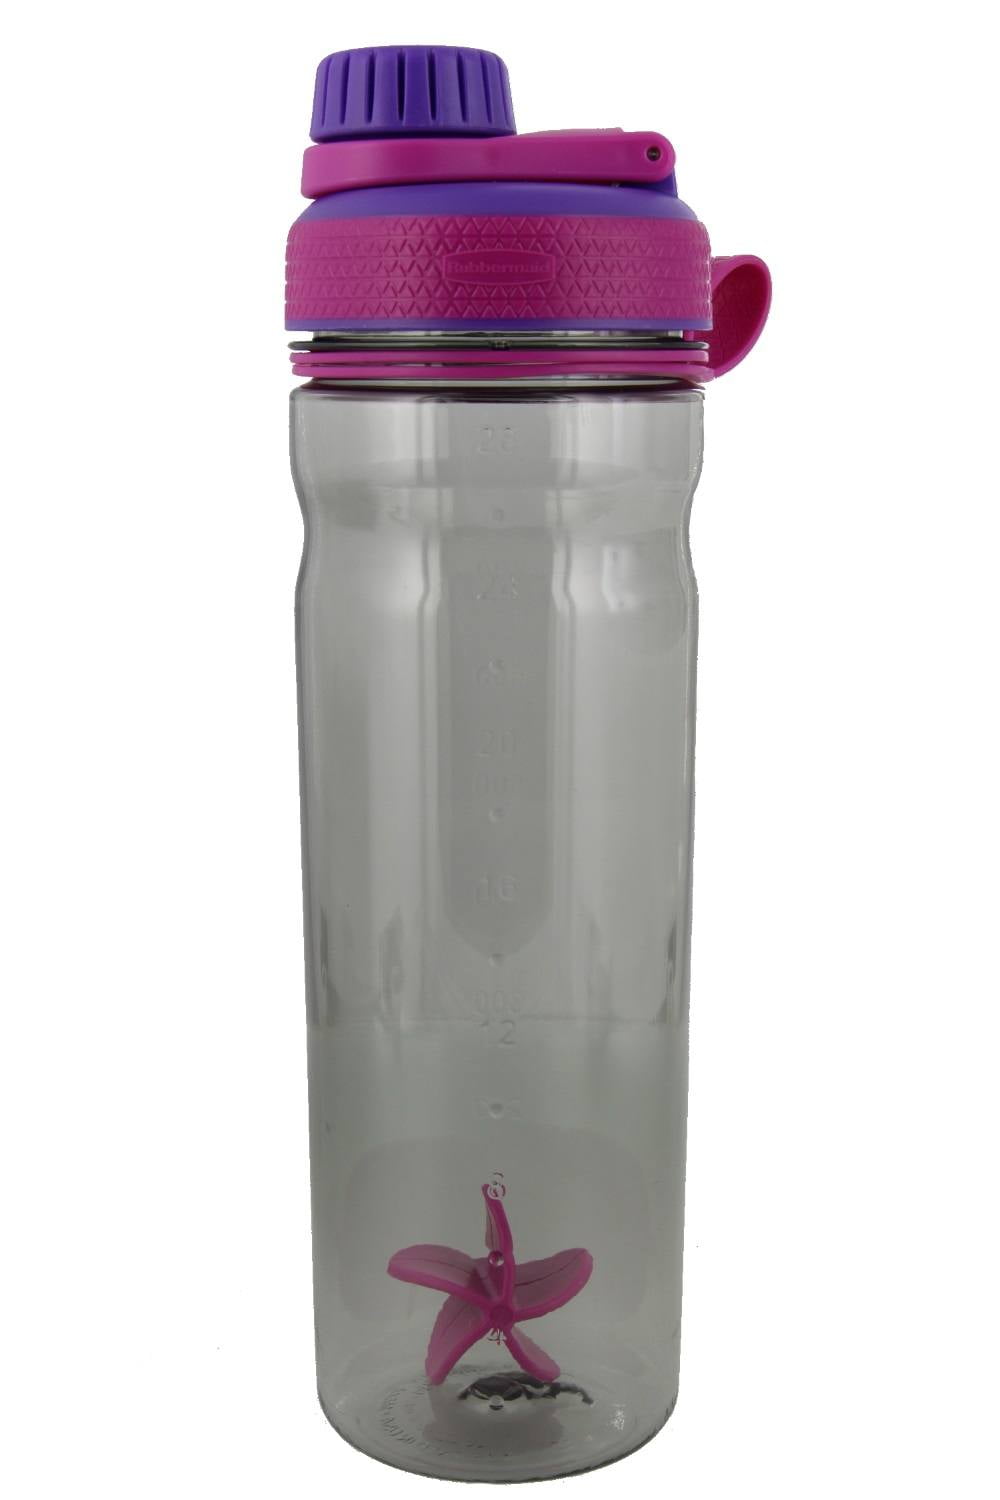 Rubbermaid Shaker Bottle-Odor &amp; Stain Resistant-Great for ...